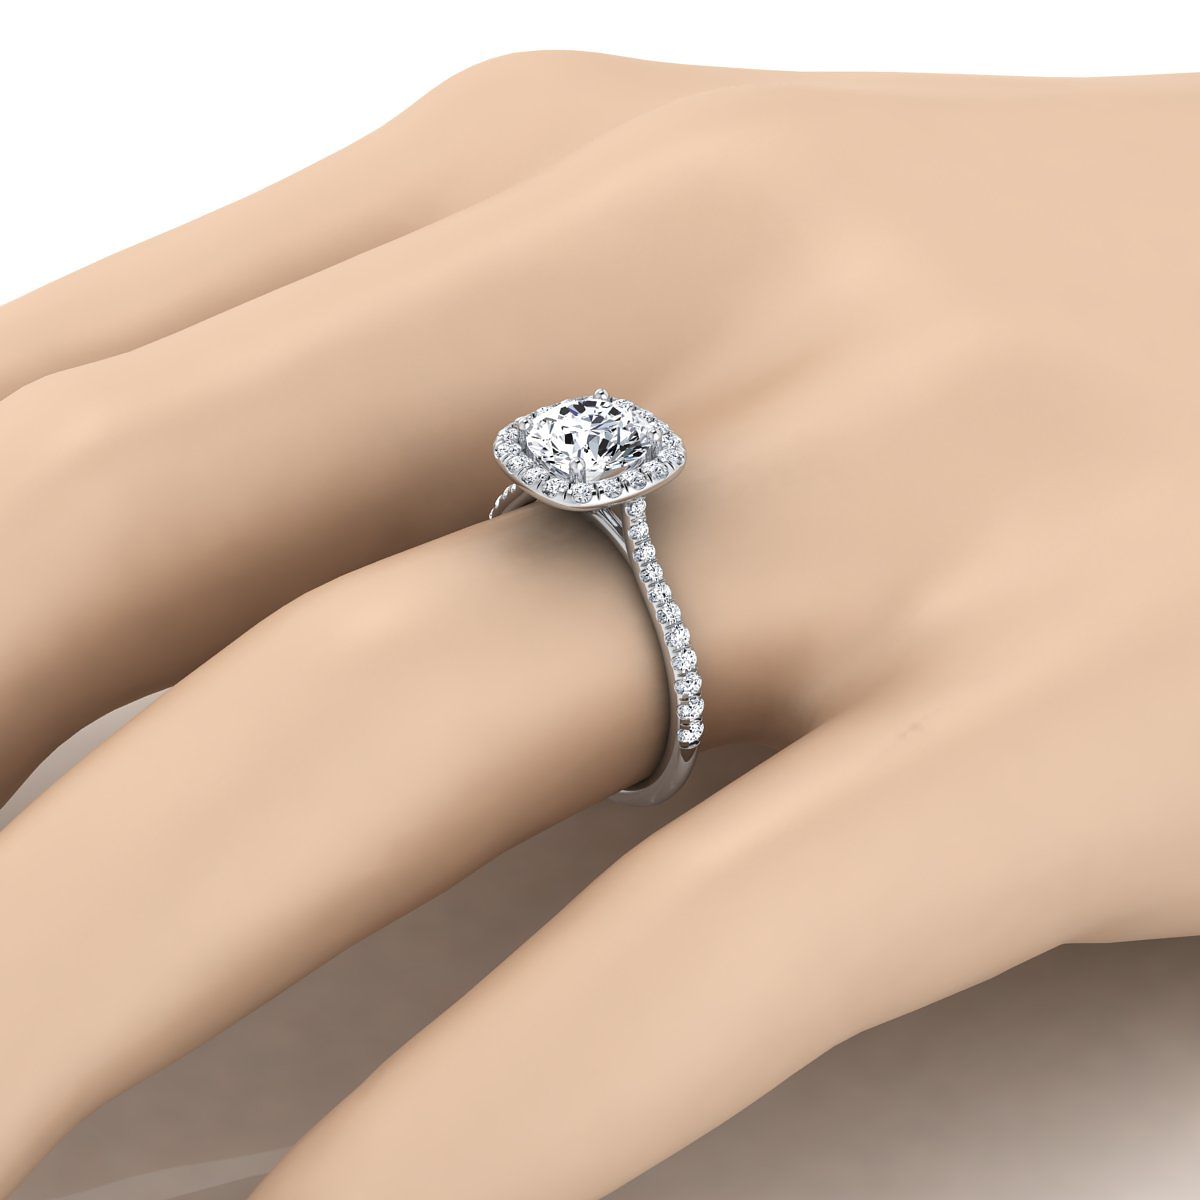 14K White Gold Round Brilliant Citrine Shared Prong Diamond Halo Engagement Ring -3/8ctw